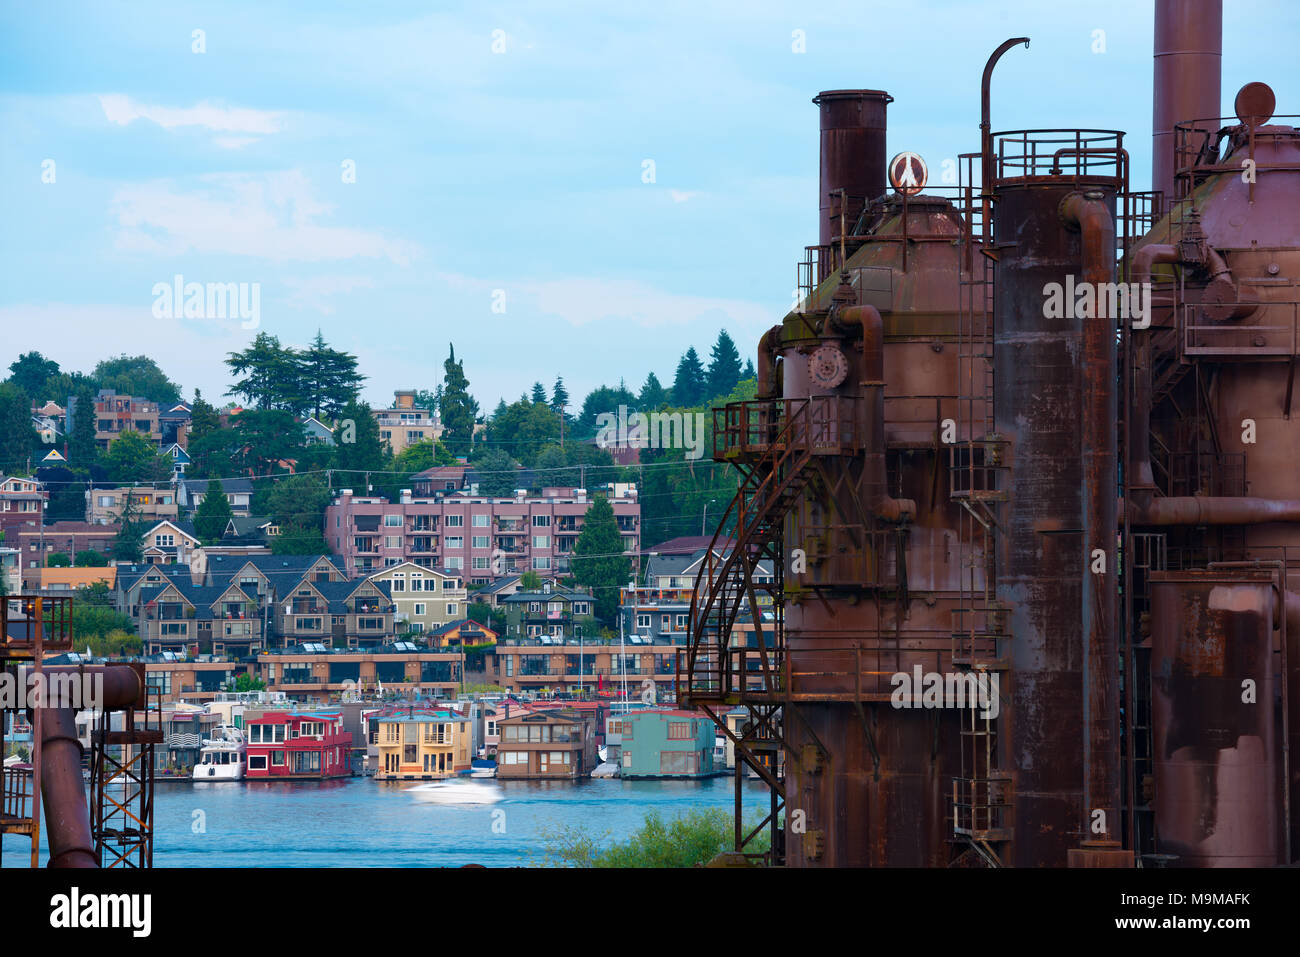 Gas Works Park and traditional Floating houses on Lake Union, Seattle, Washington State, USA Stock Photo